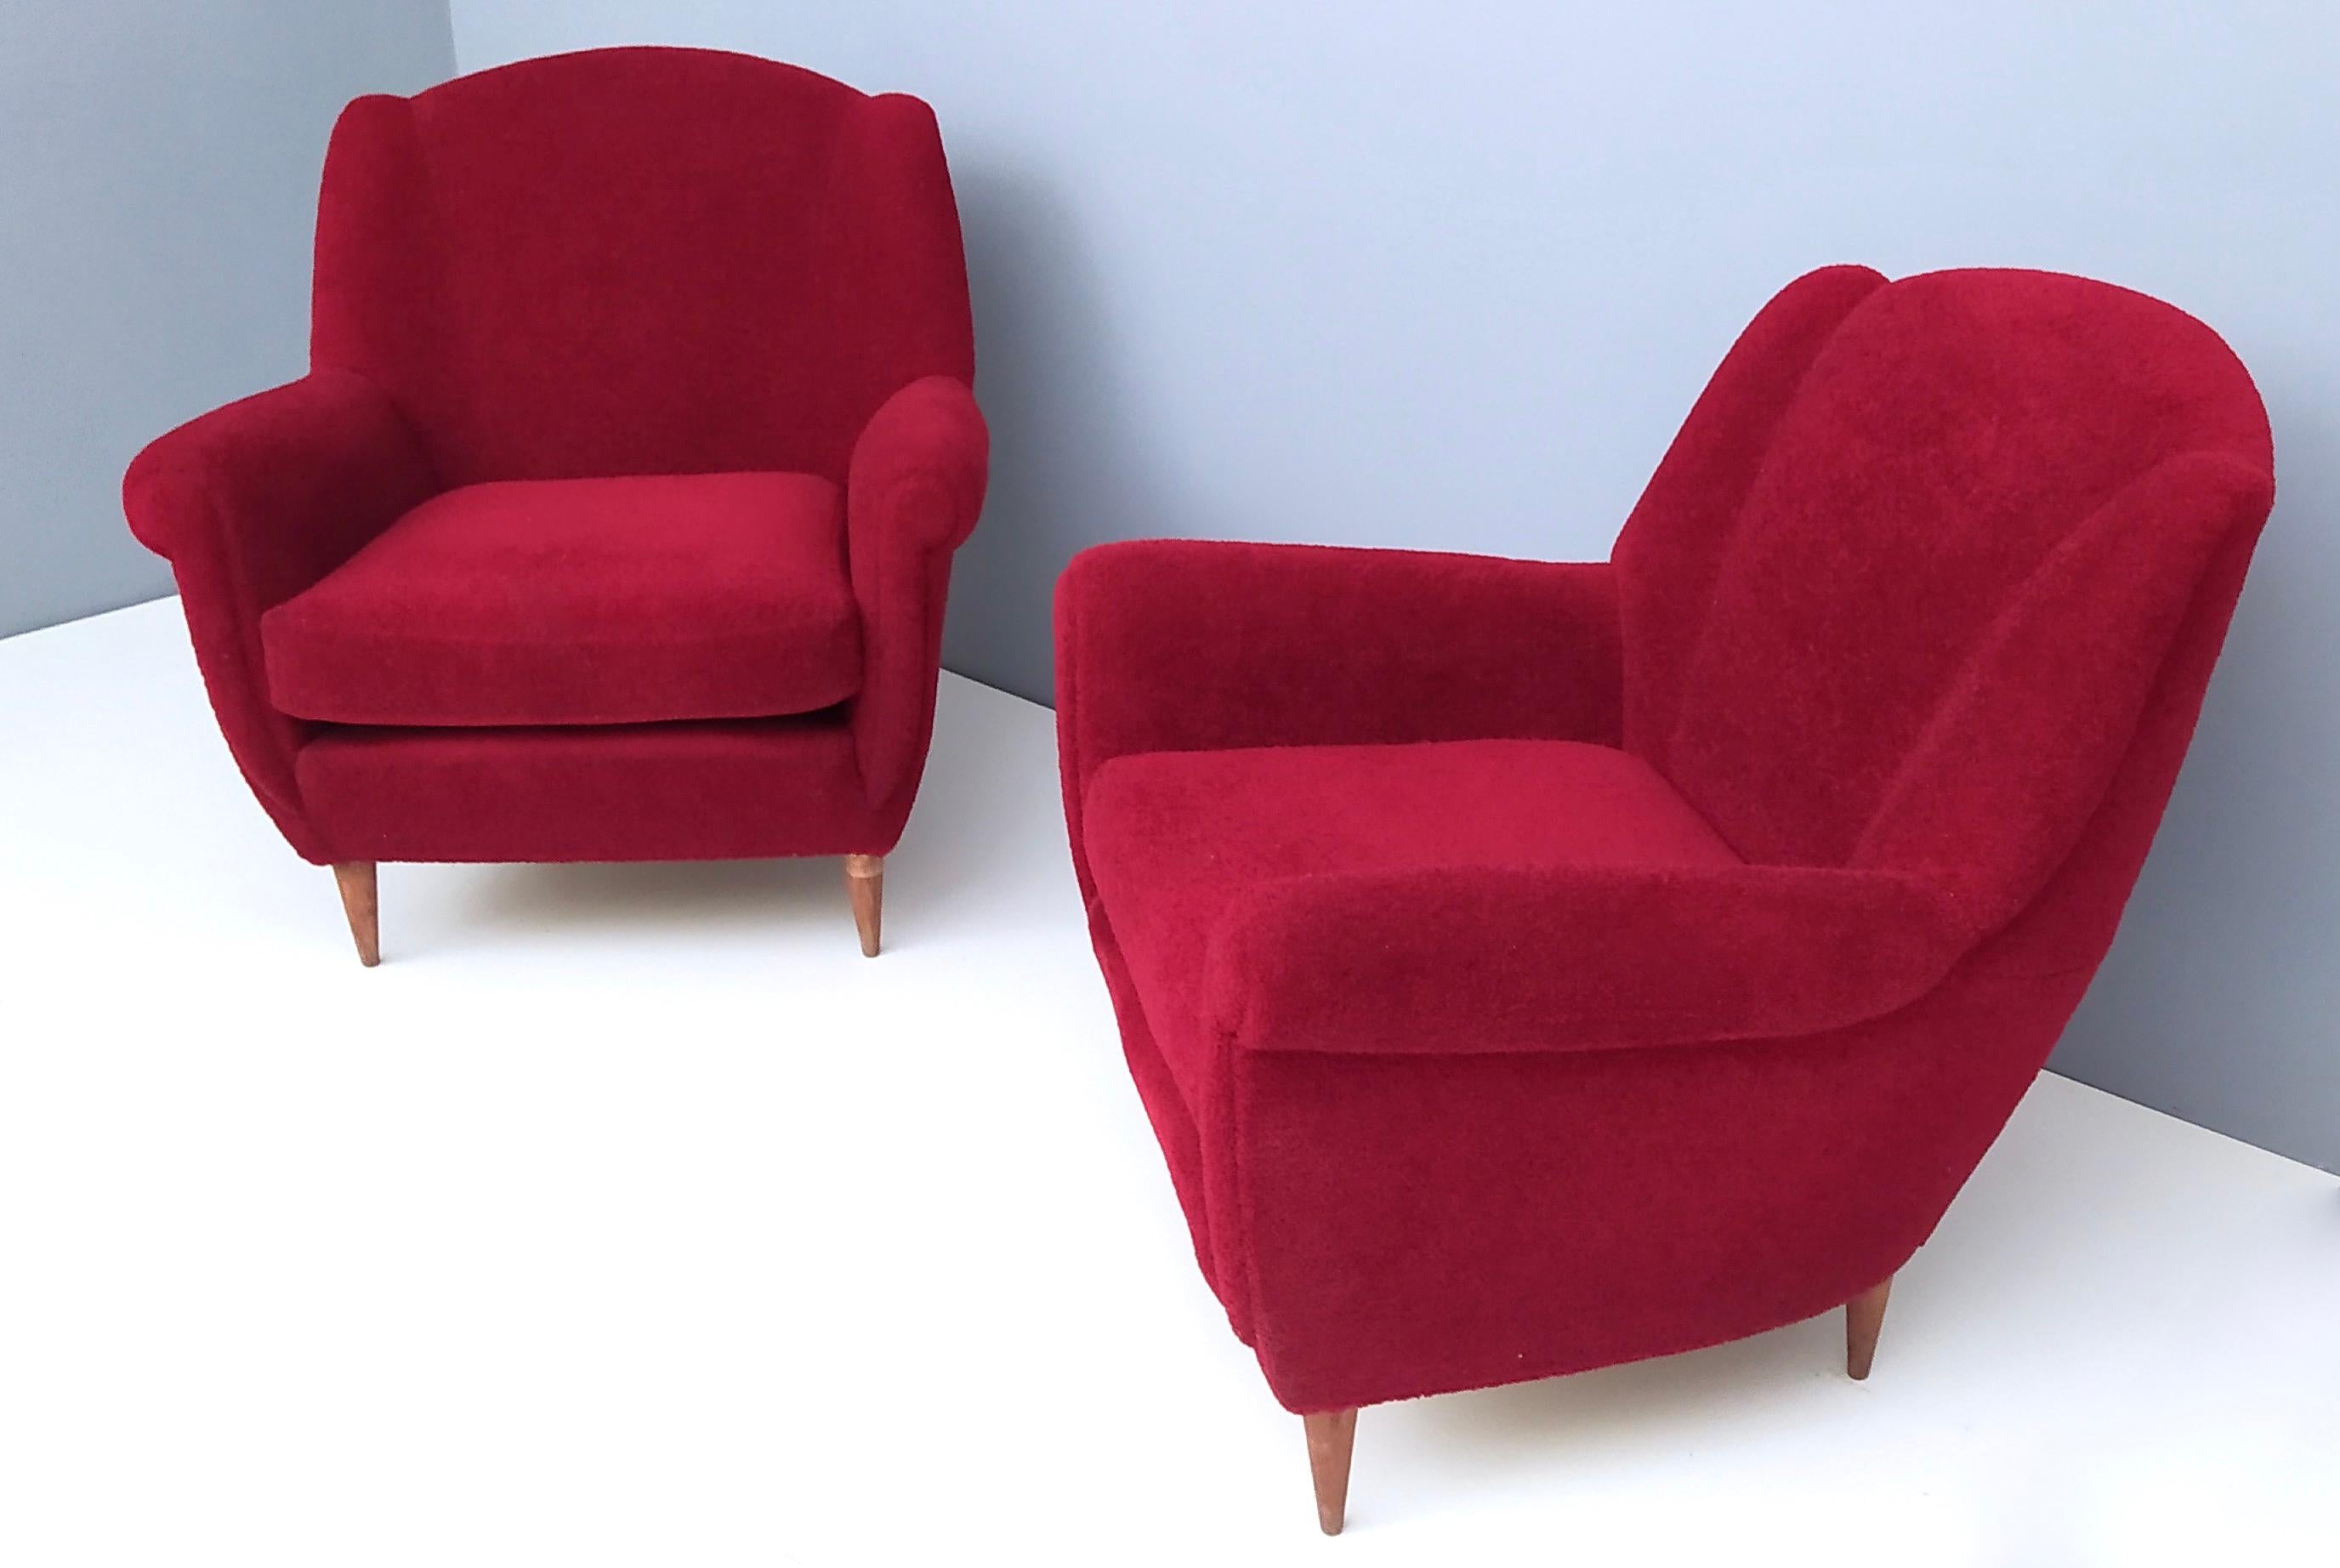 Italian Pair of Crimson Upholstered Armchairs by Gigi Radice for Minotti, Italy, 1950s